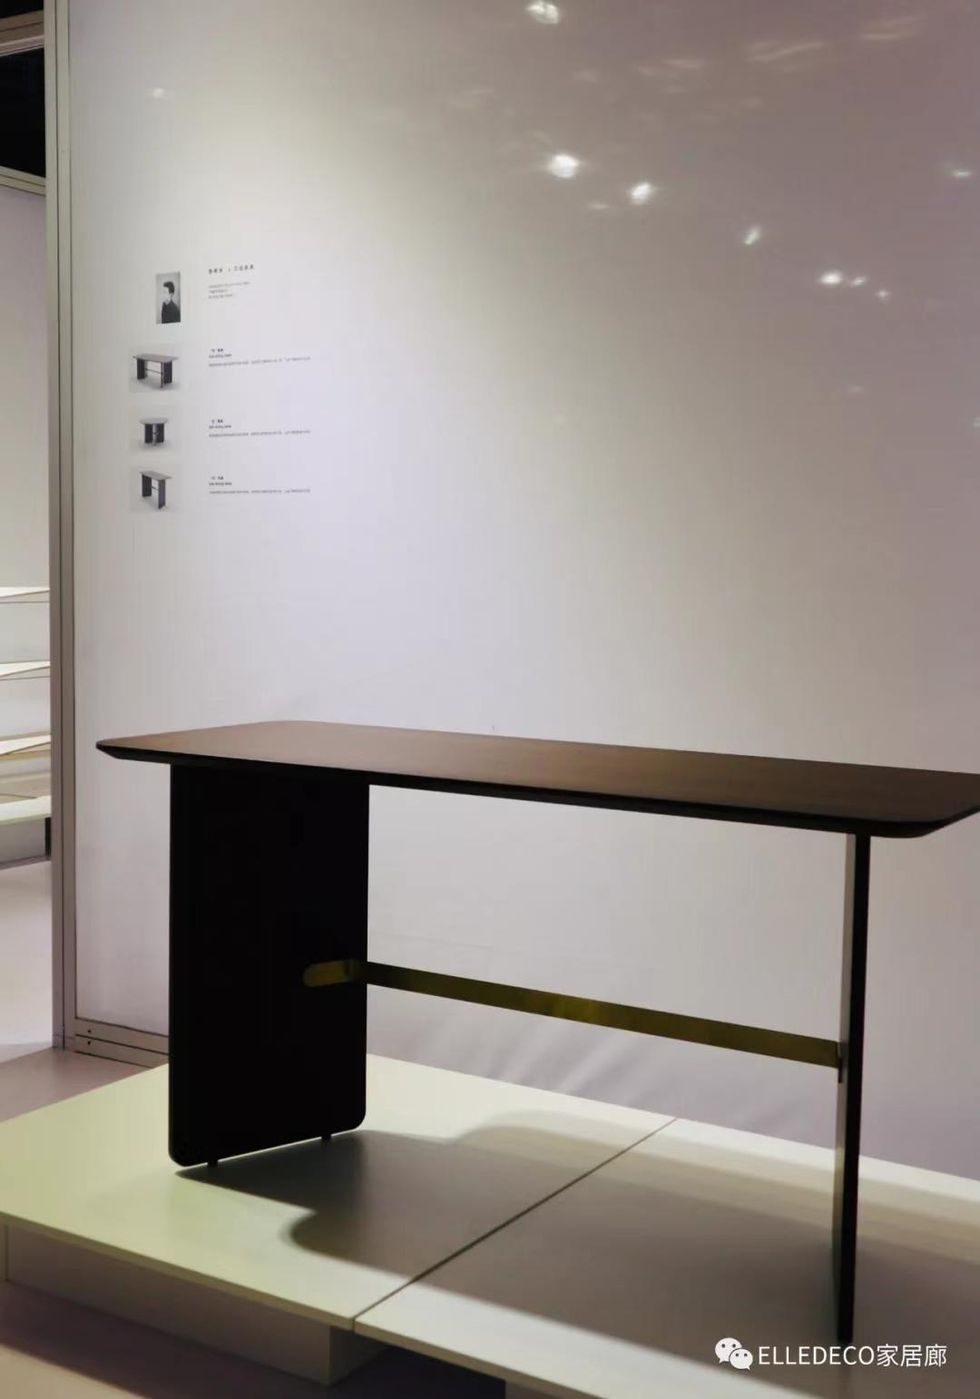 Furniture, Desk, Table, Interior design, Design, Room, Material property, Glass, Architecture, Shelf, 